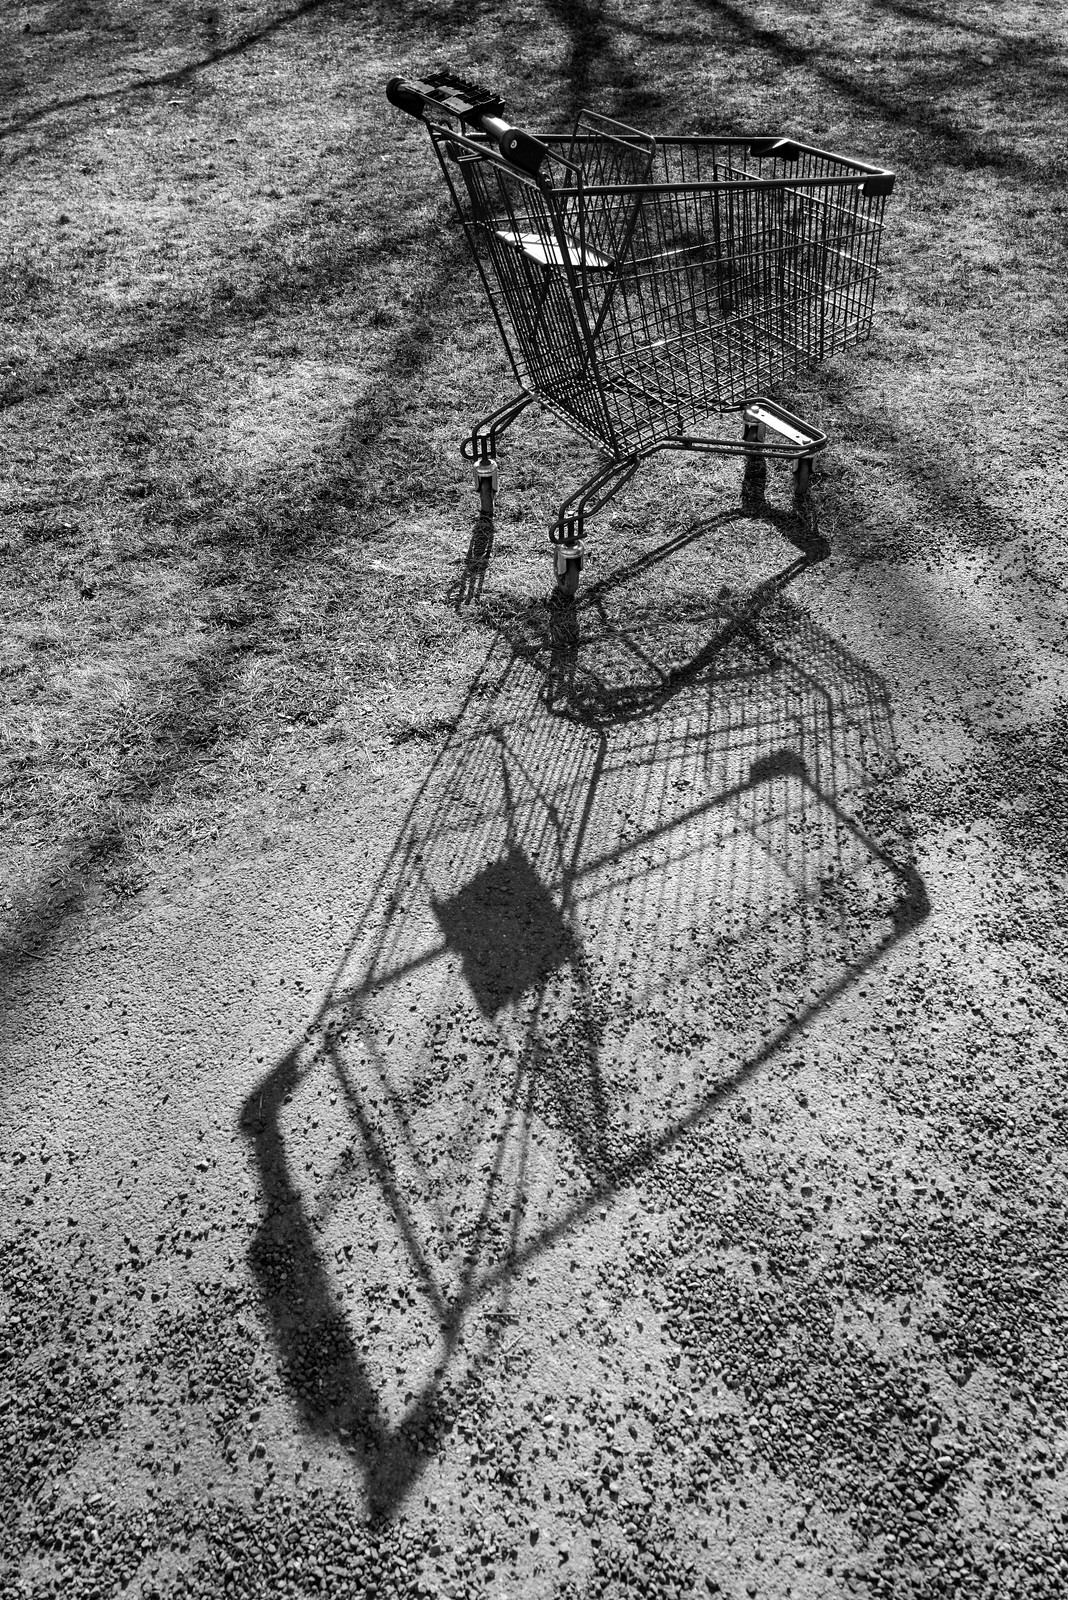 Abandoned cart